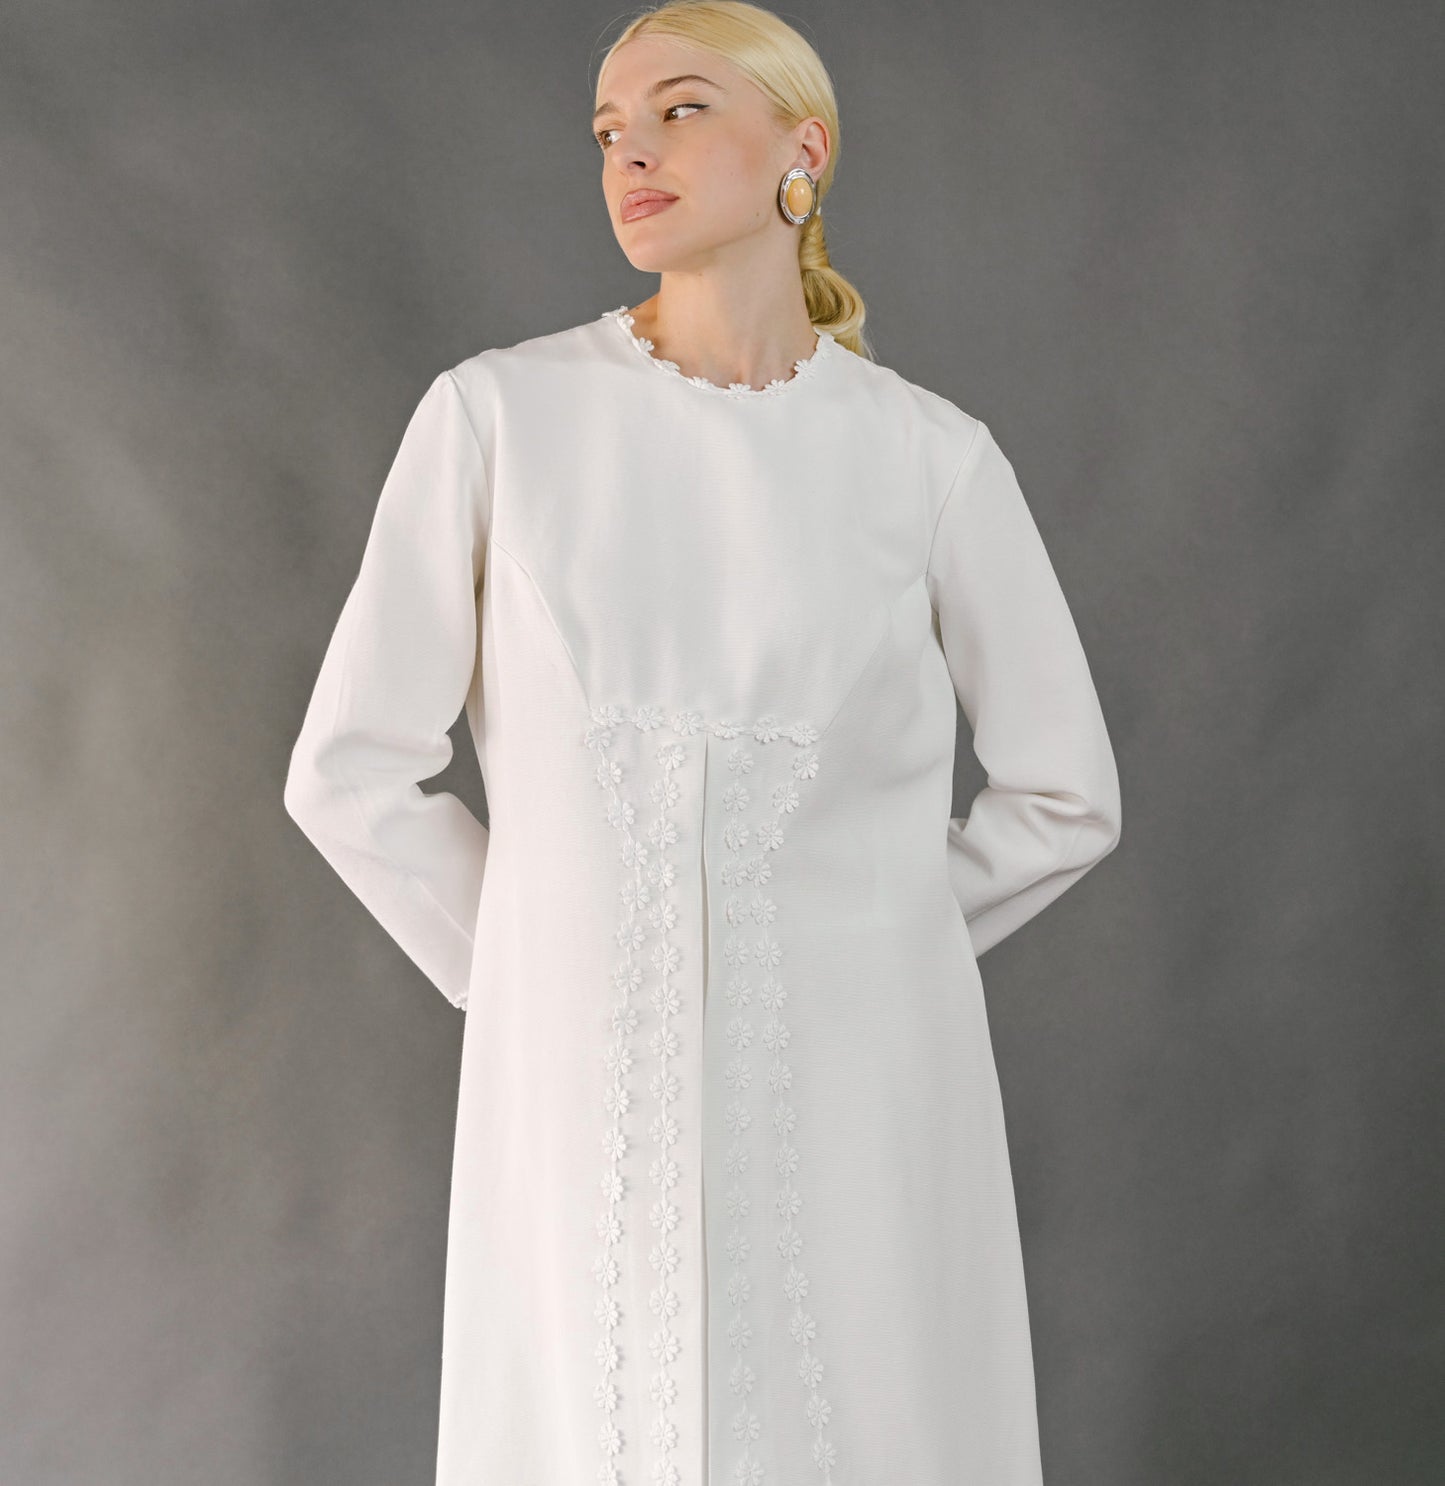 VIN-WED-23598 Vintage νυφικό φόρεμα λευκό L-XL